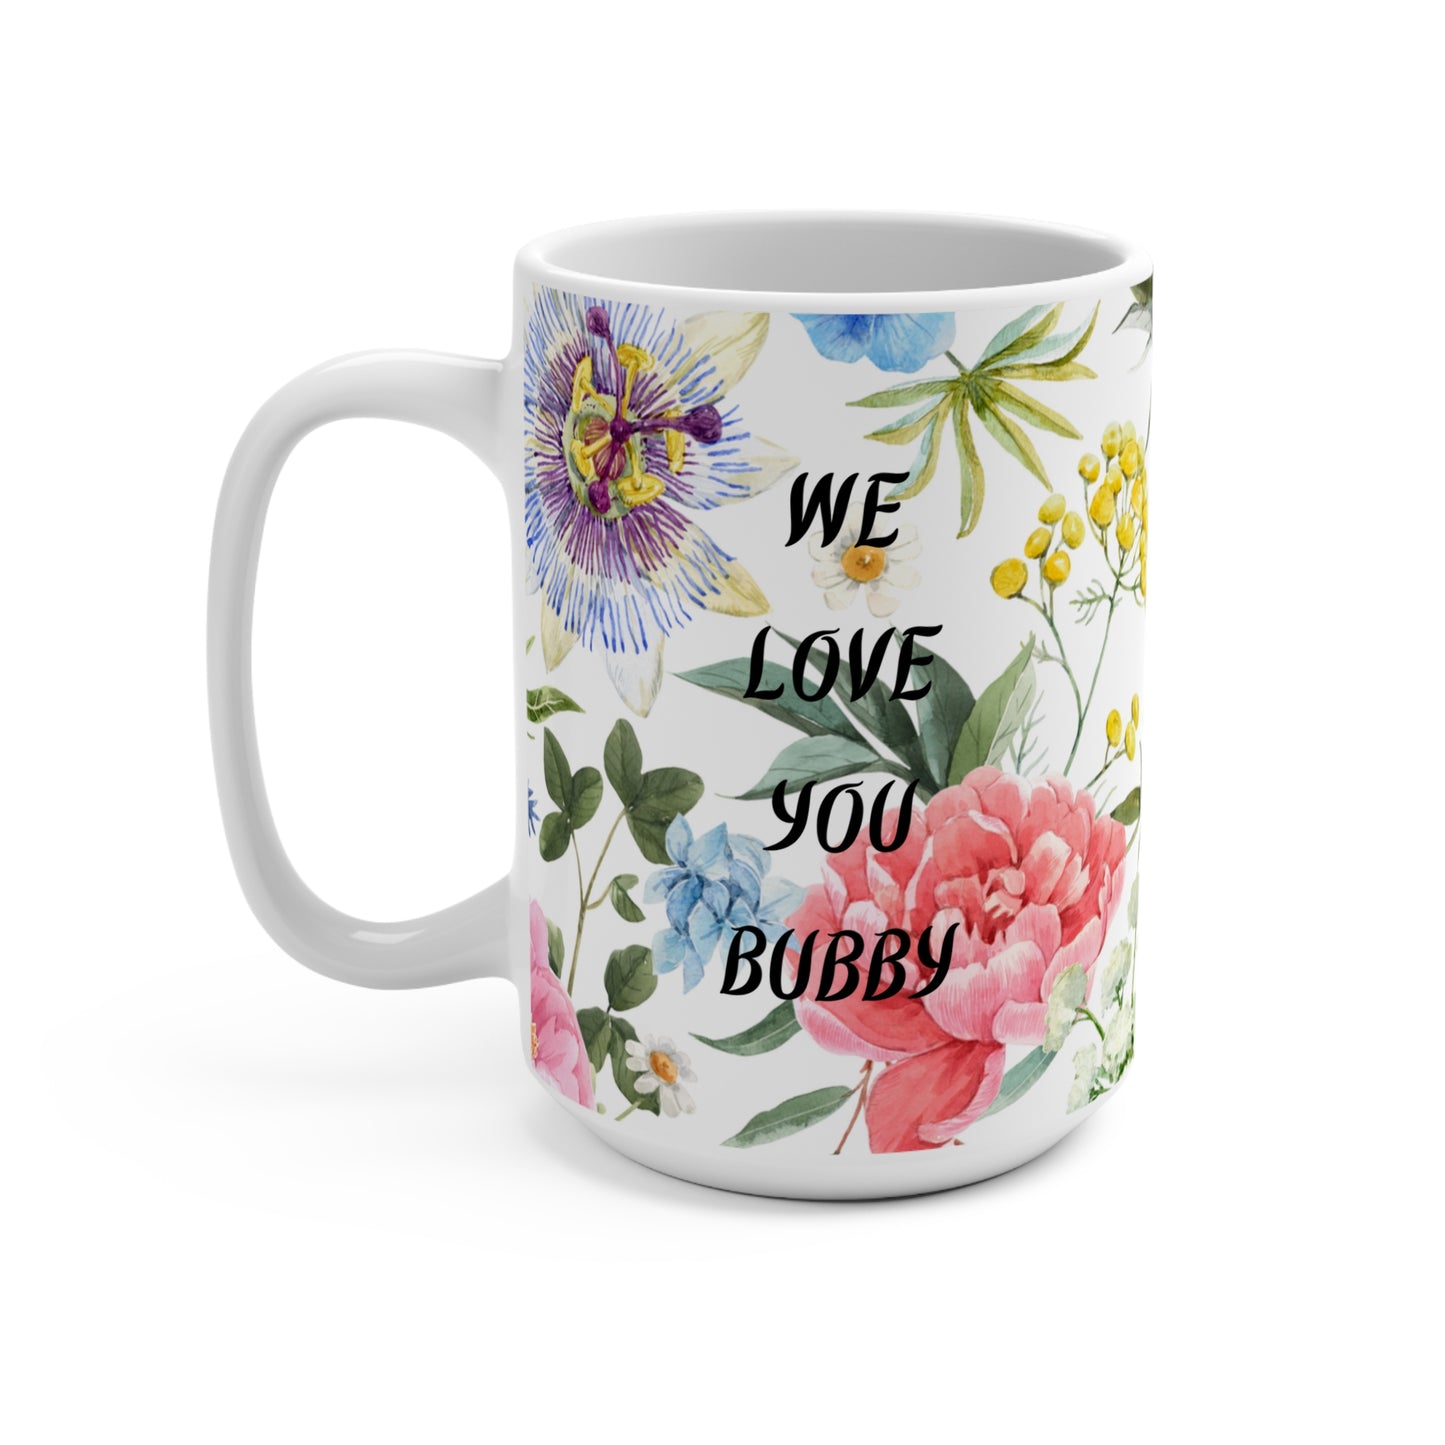 We love you Bubby floral Mug 15oz